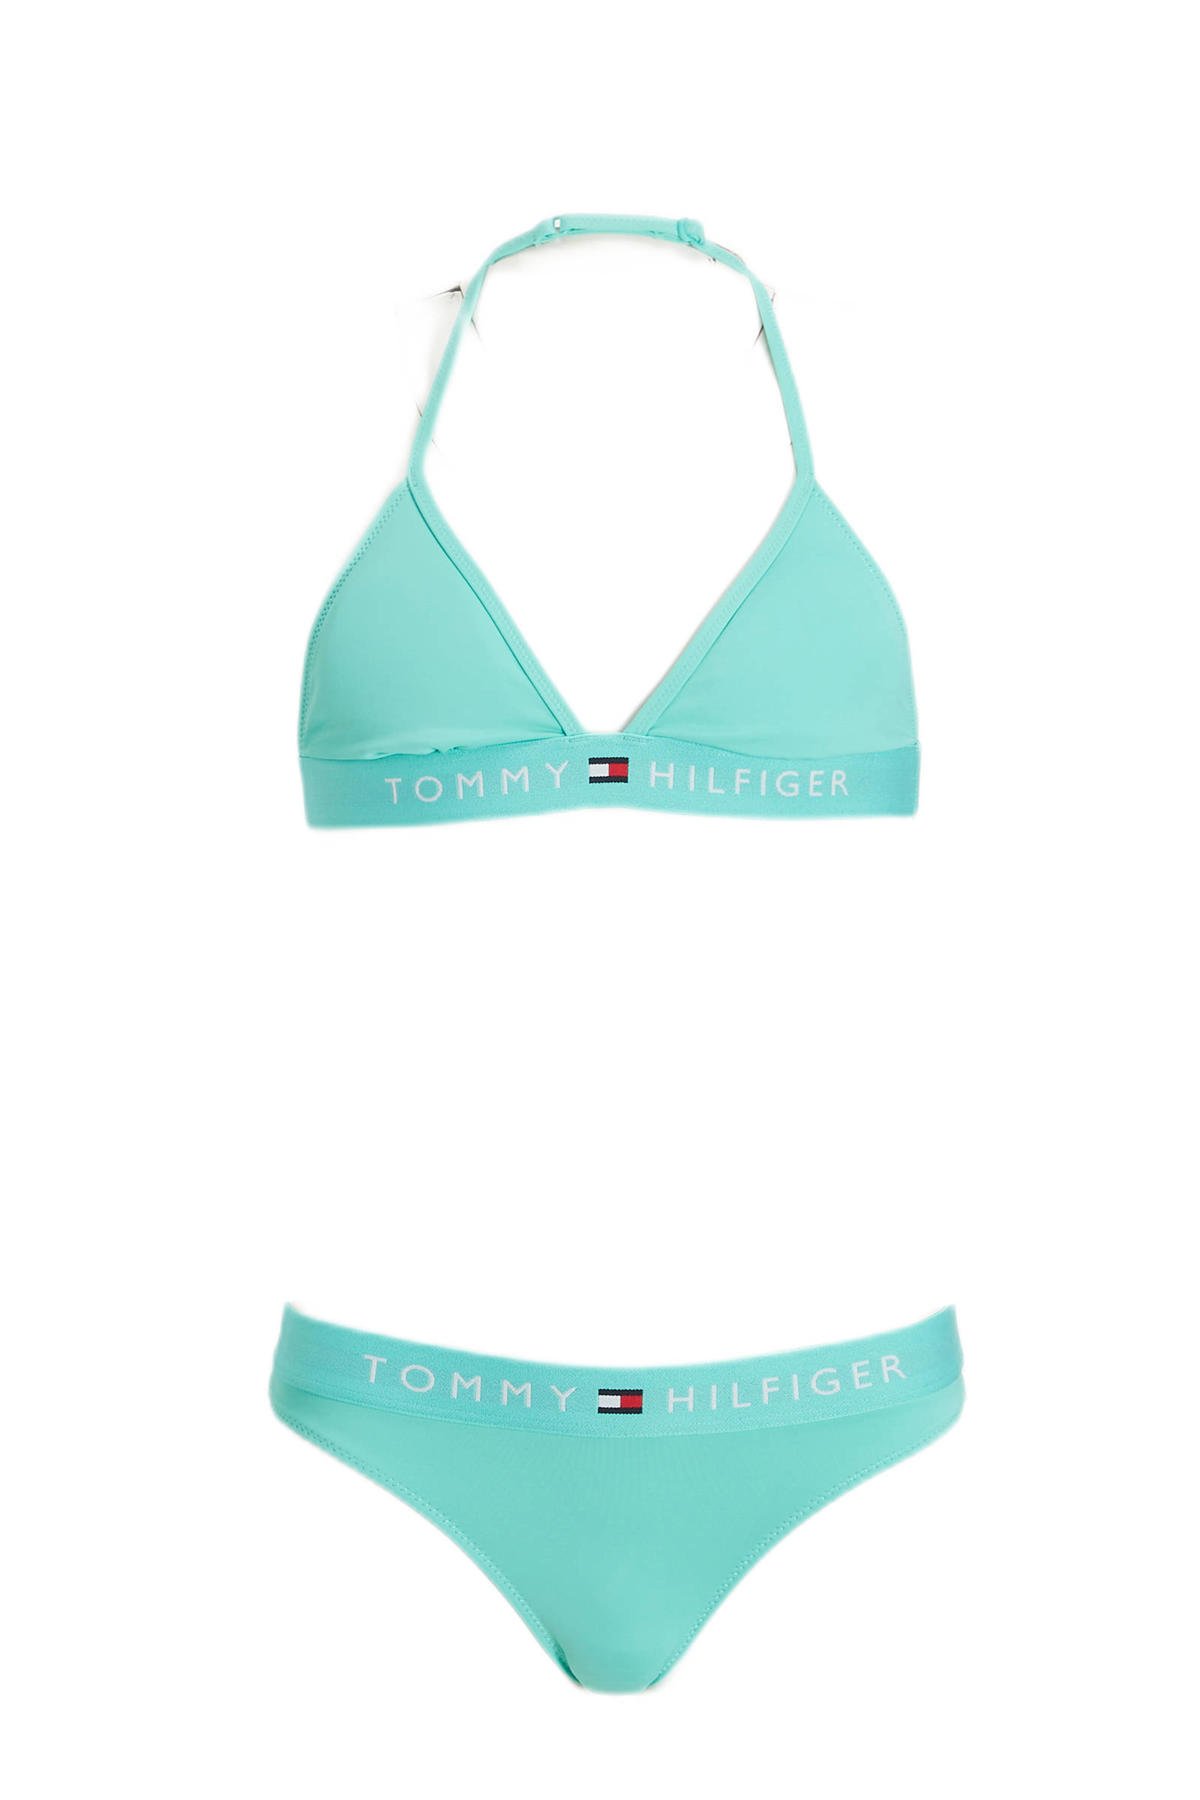 Hilfiger triangel bikini turquoise